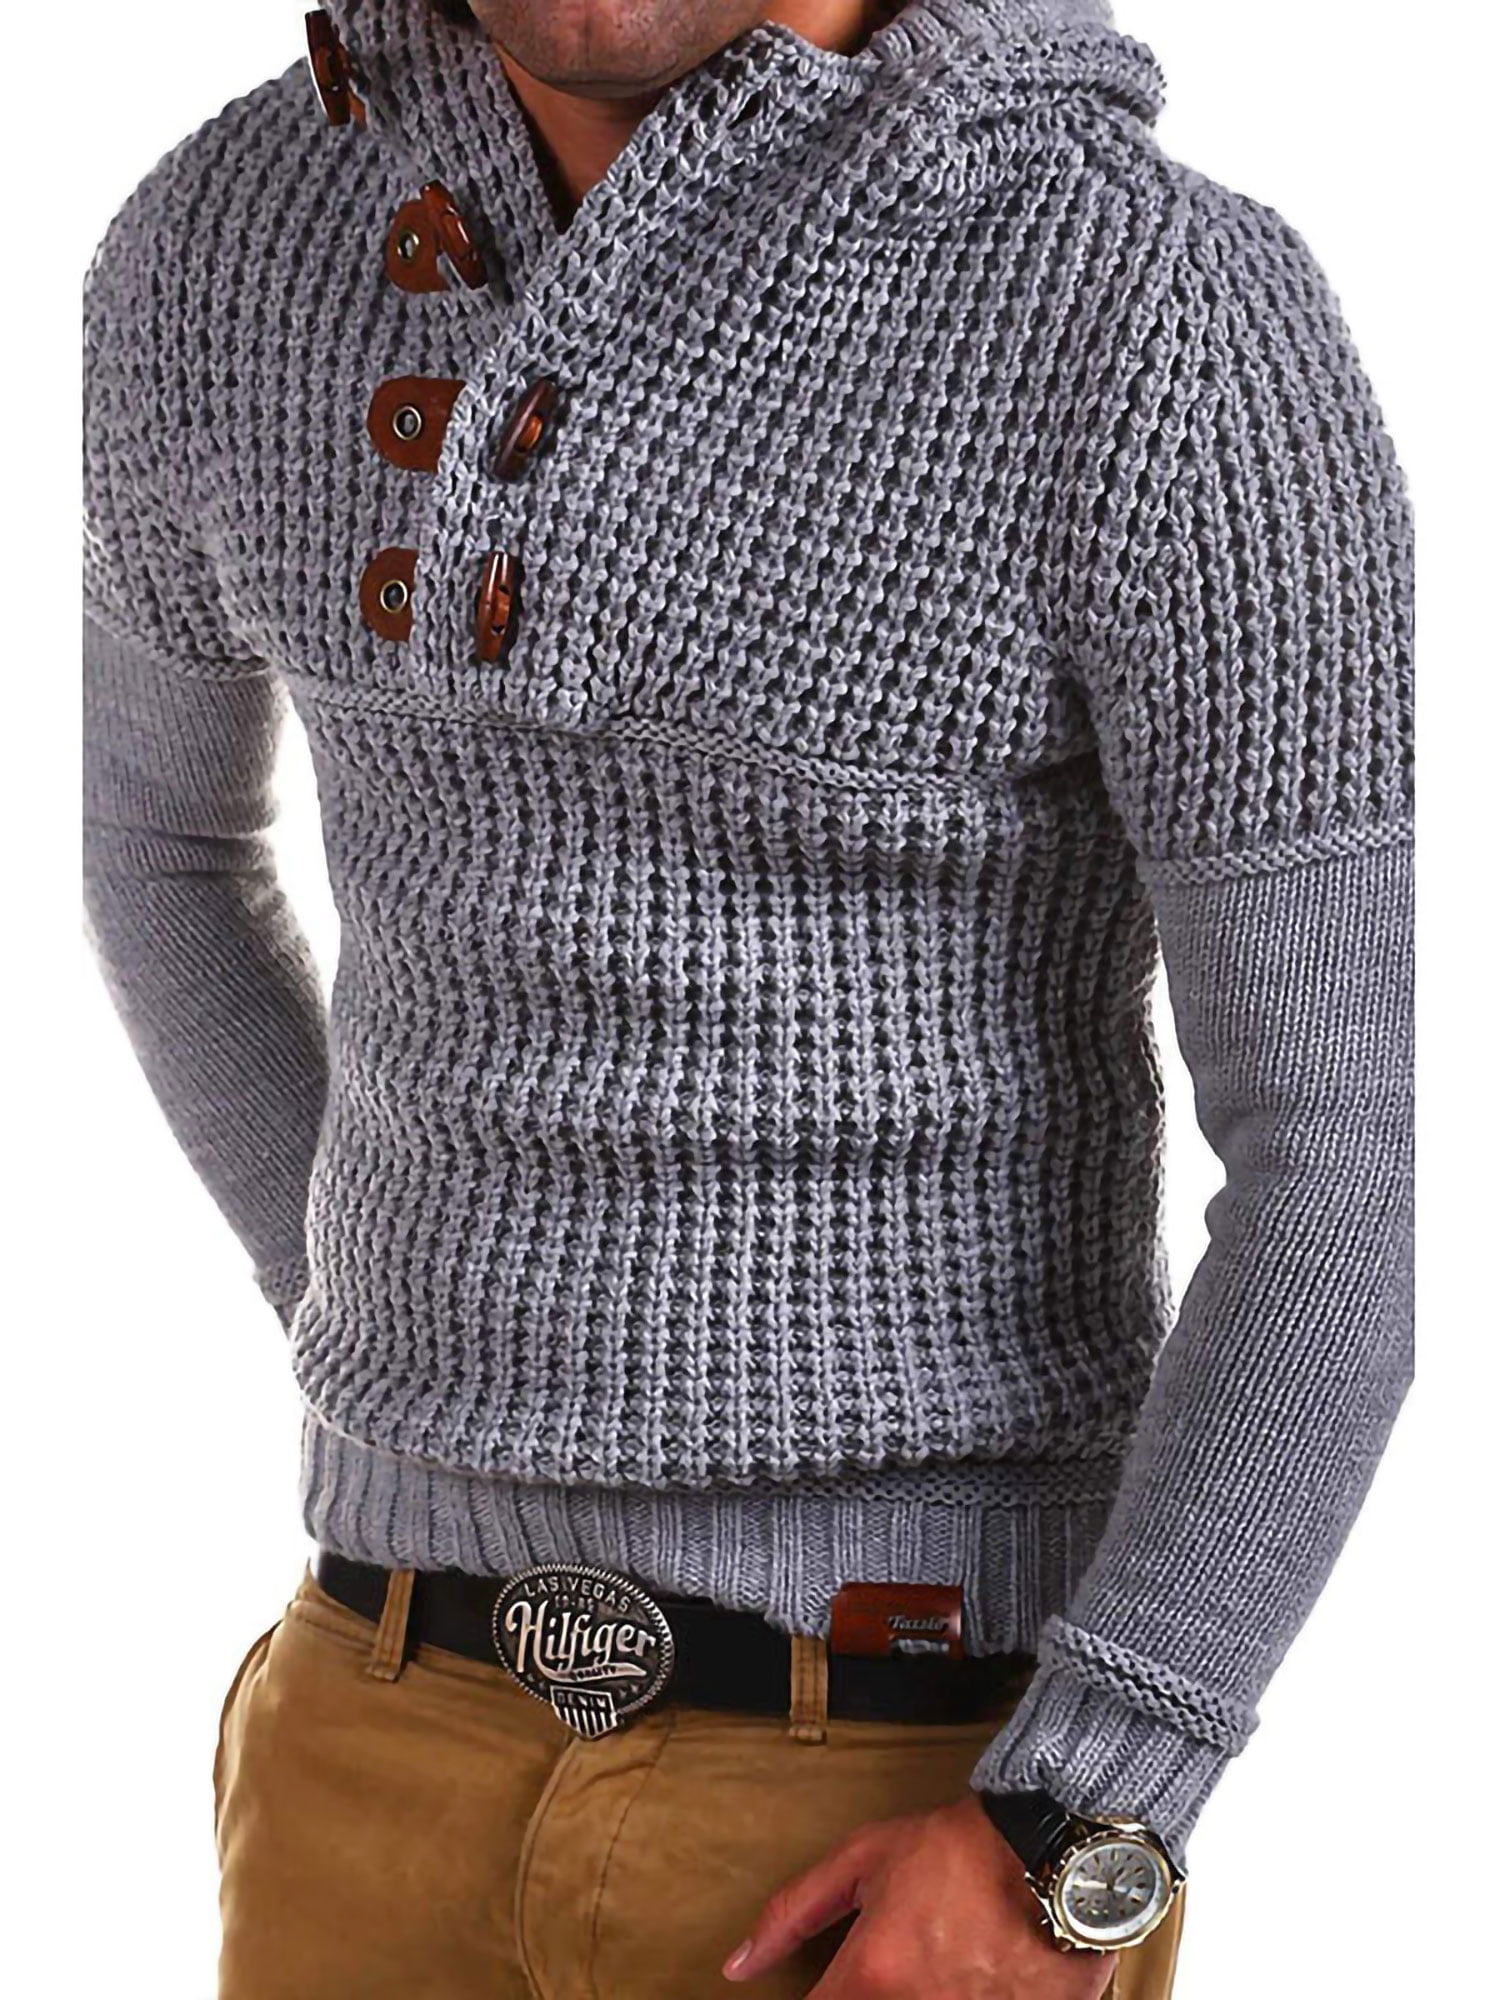 Chums Mens Aran Jumper Cable Warm Sweater Top